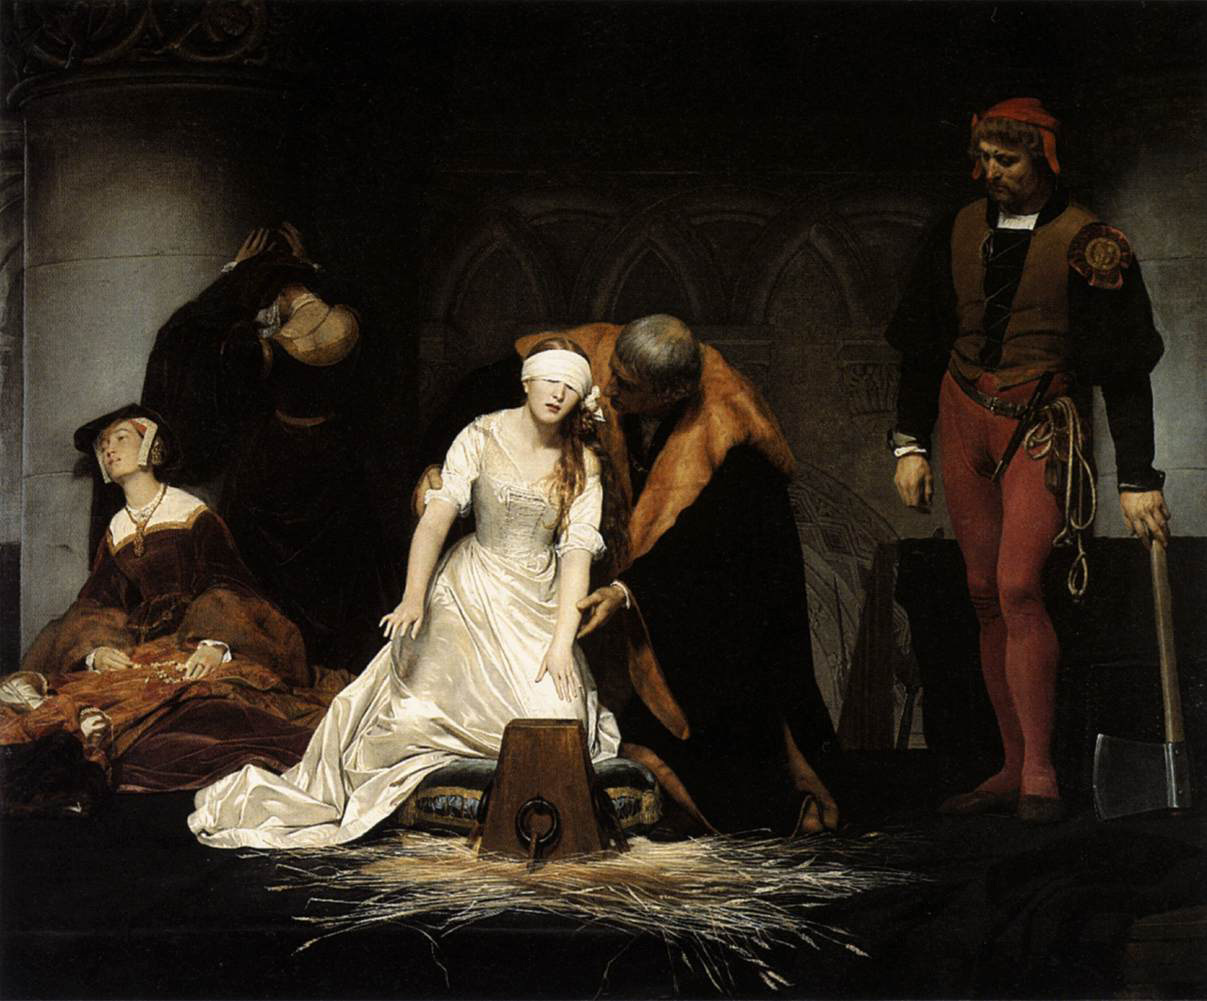 1554: Young English Lady Jane Grey beheaded